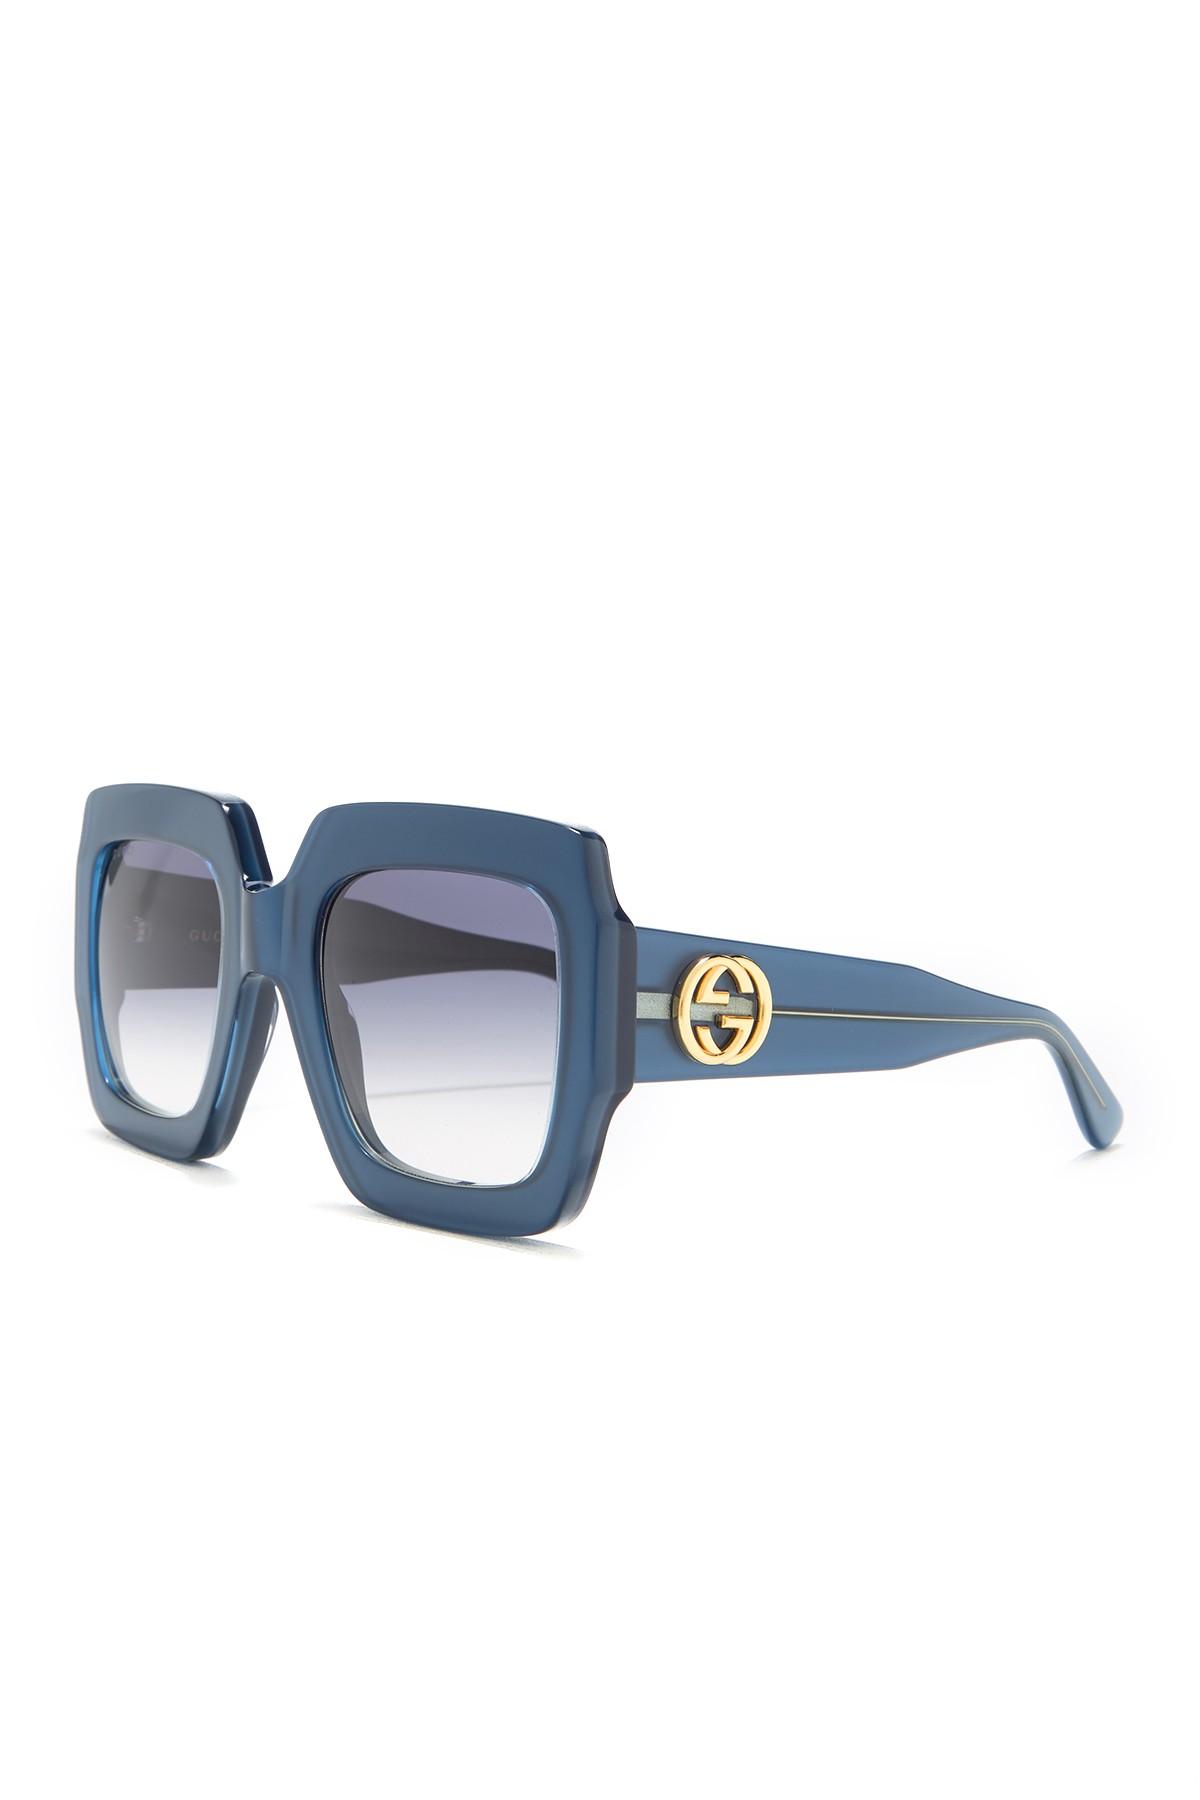 Gucci 54mm Oversized Square Sunglasses in dk Blue (Blue) | Lyst